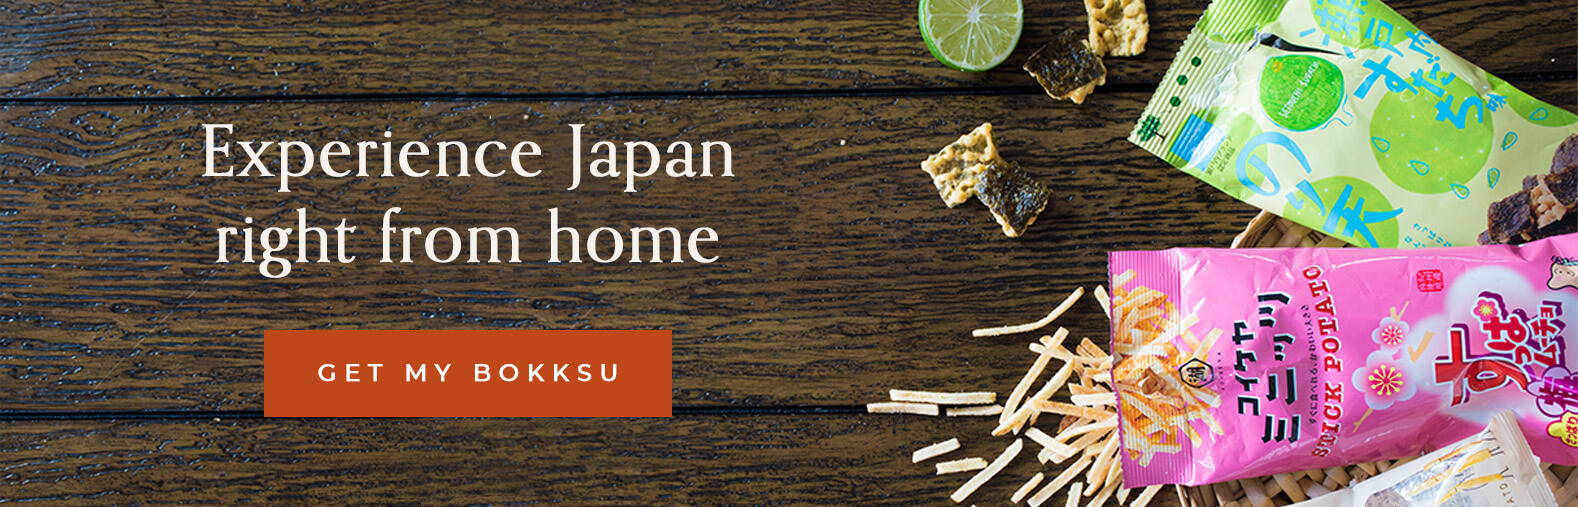 join Bokksu japanese snack subscription box service today